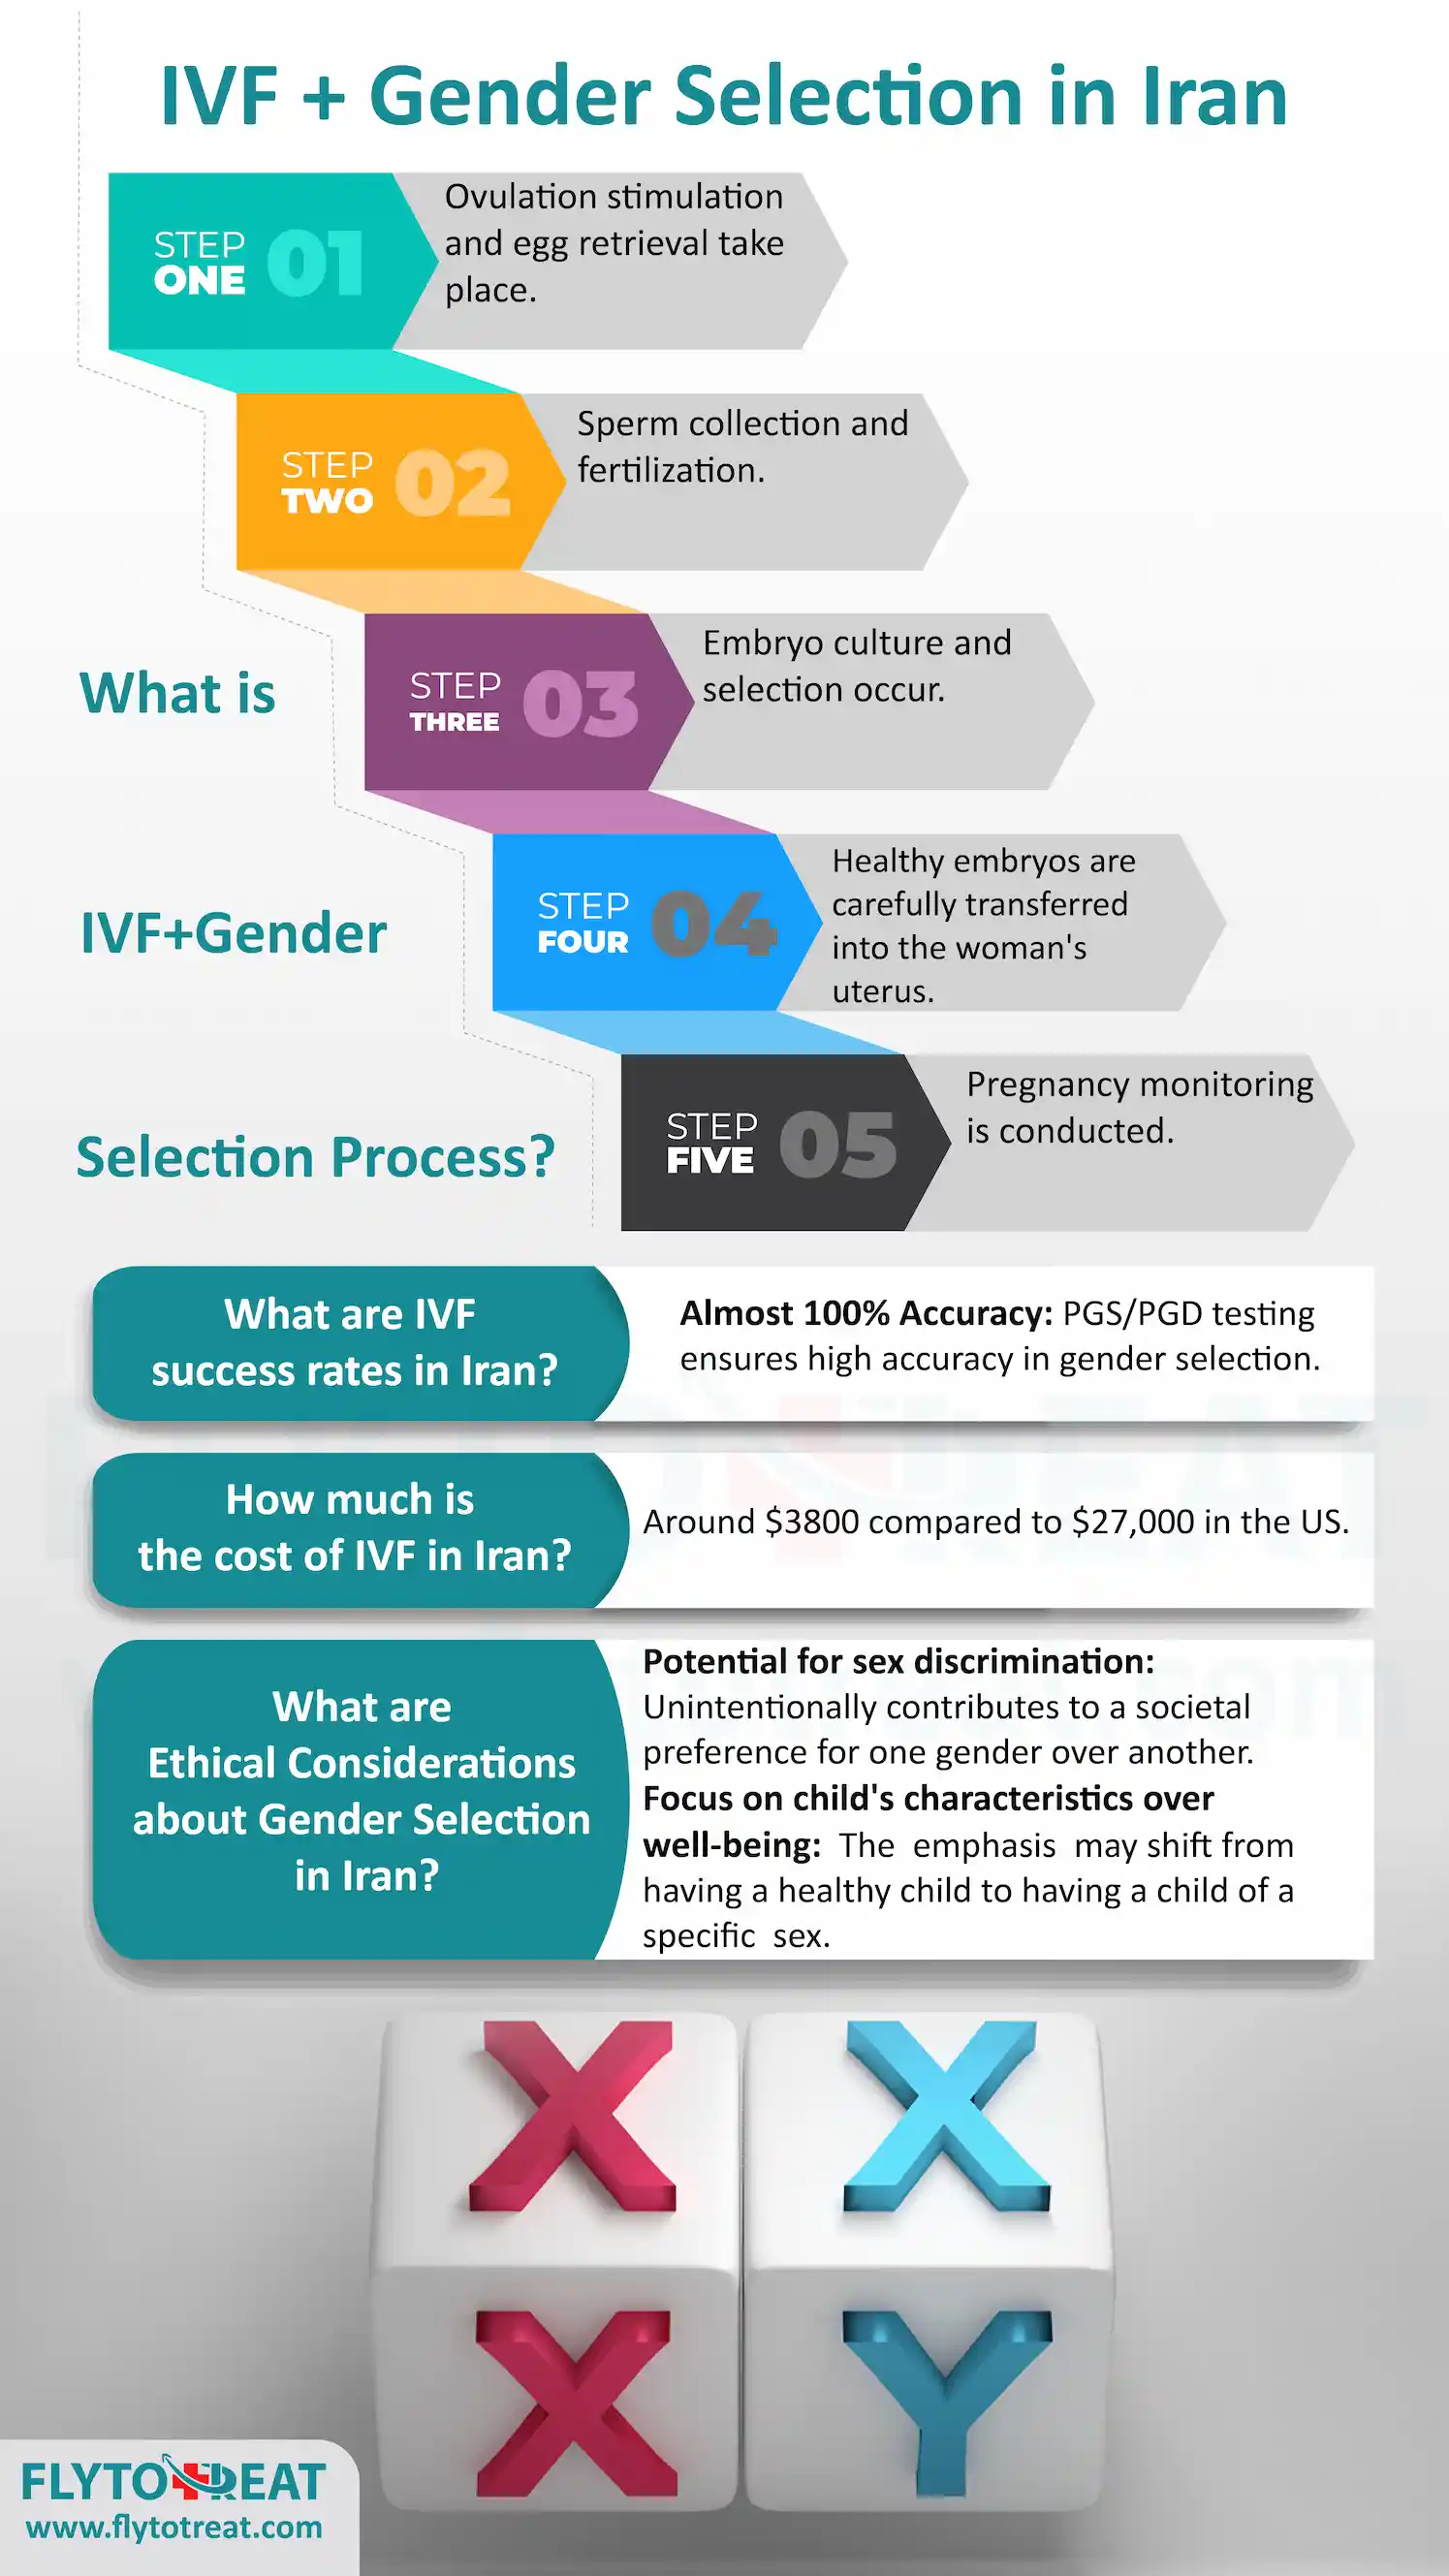 IVF+Gender selection in Iran